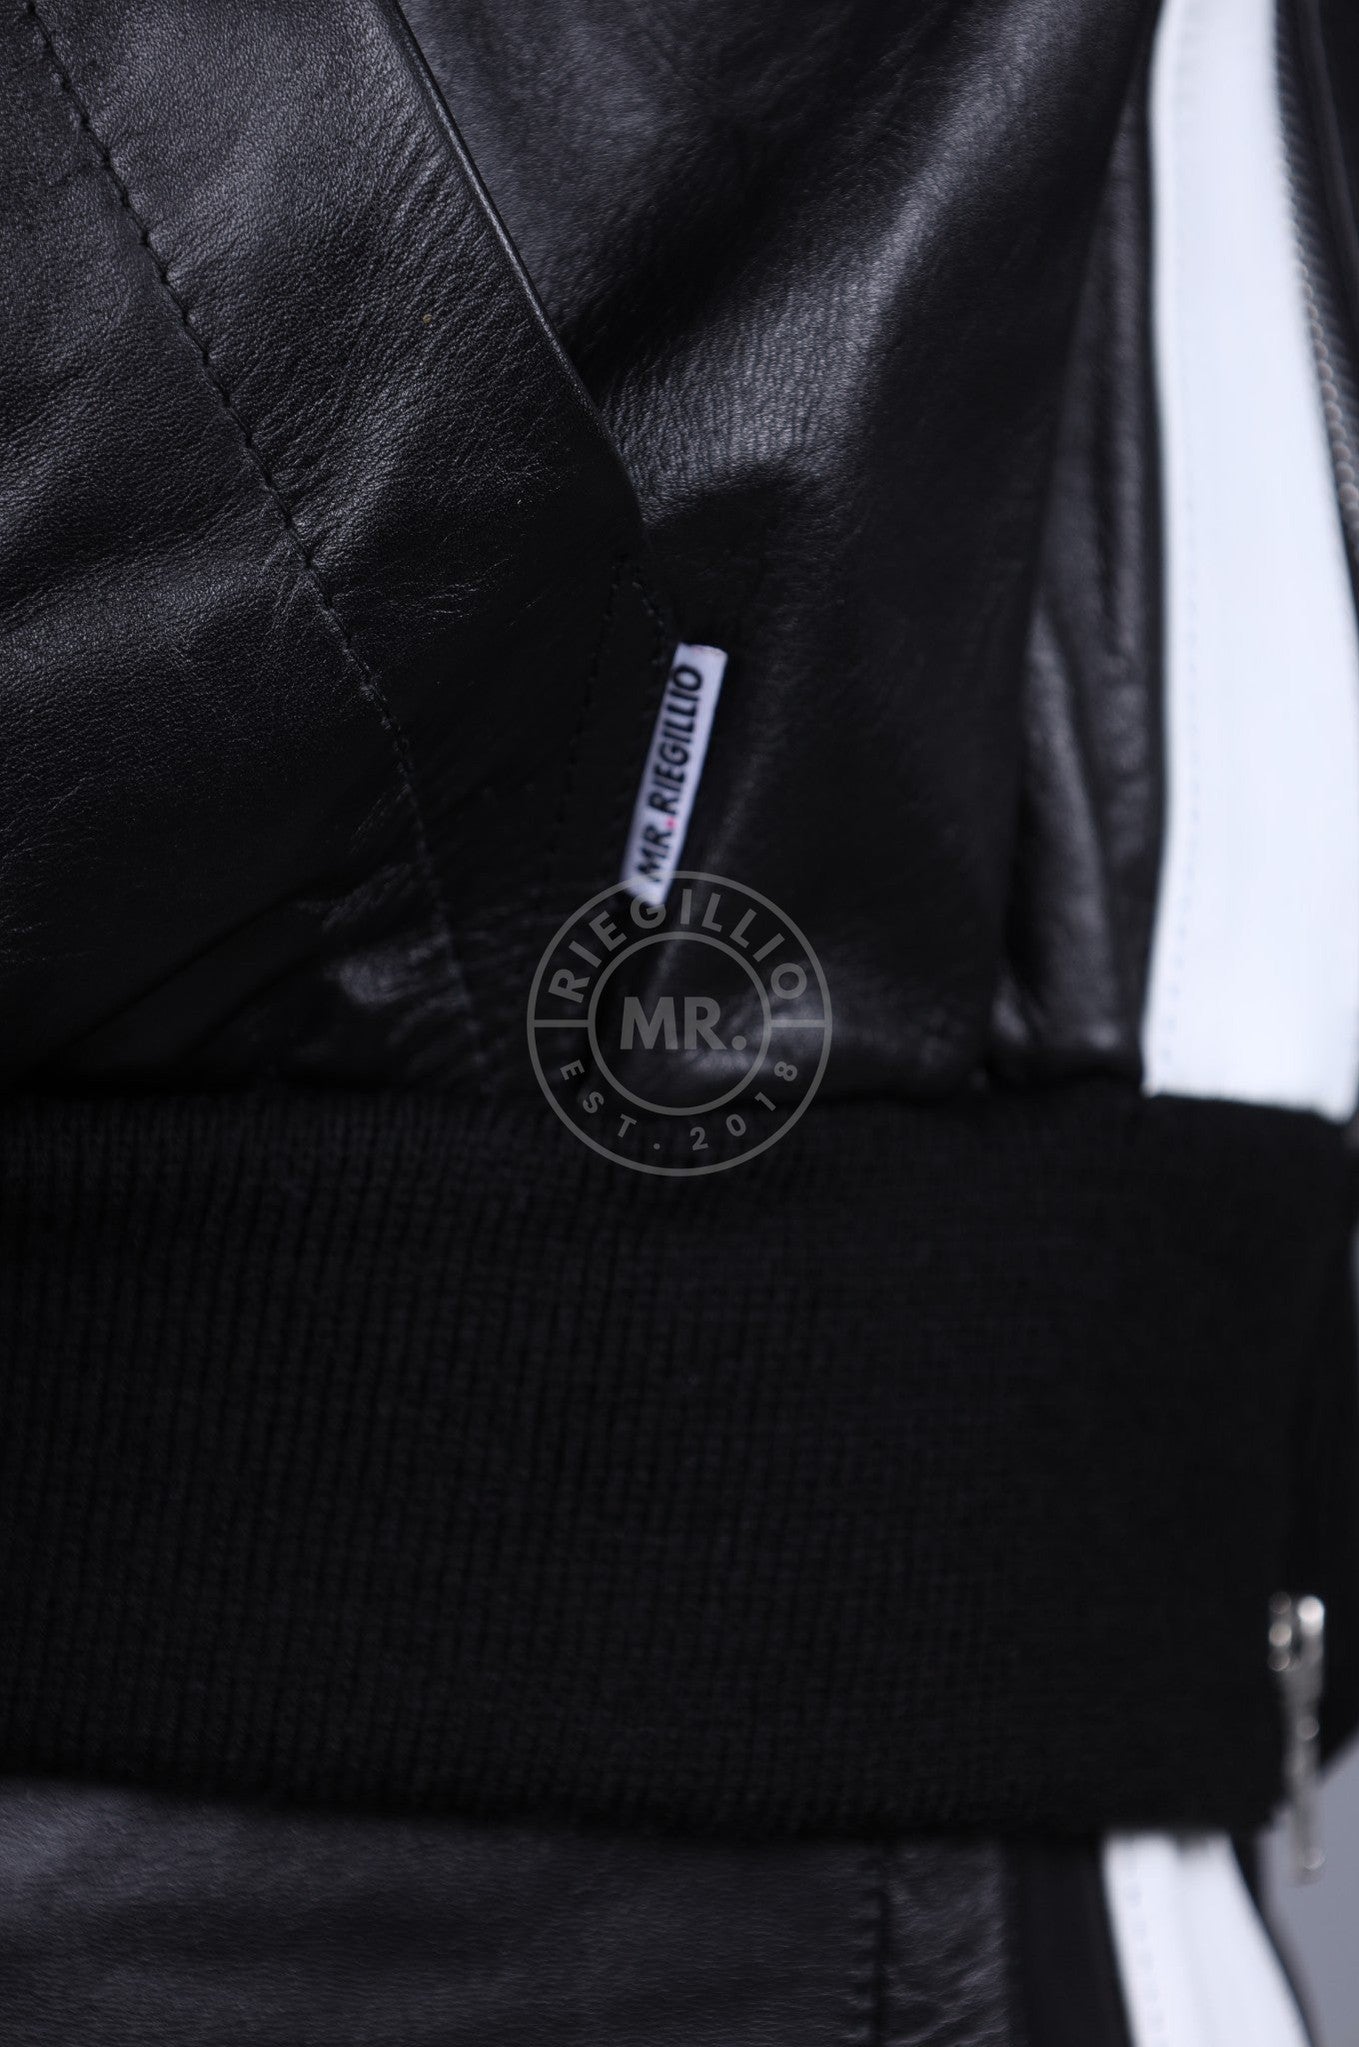 Black Leather Sports Hoodie - White Stripe at MR. Riegillio